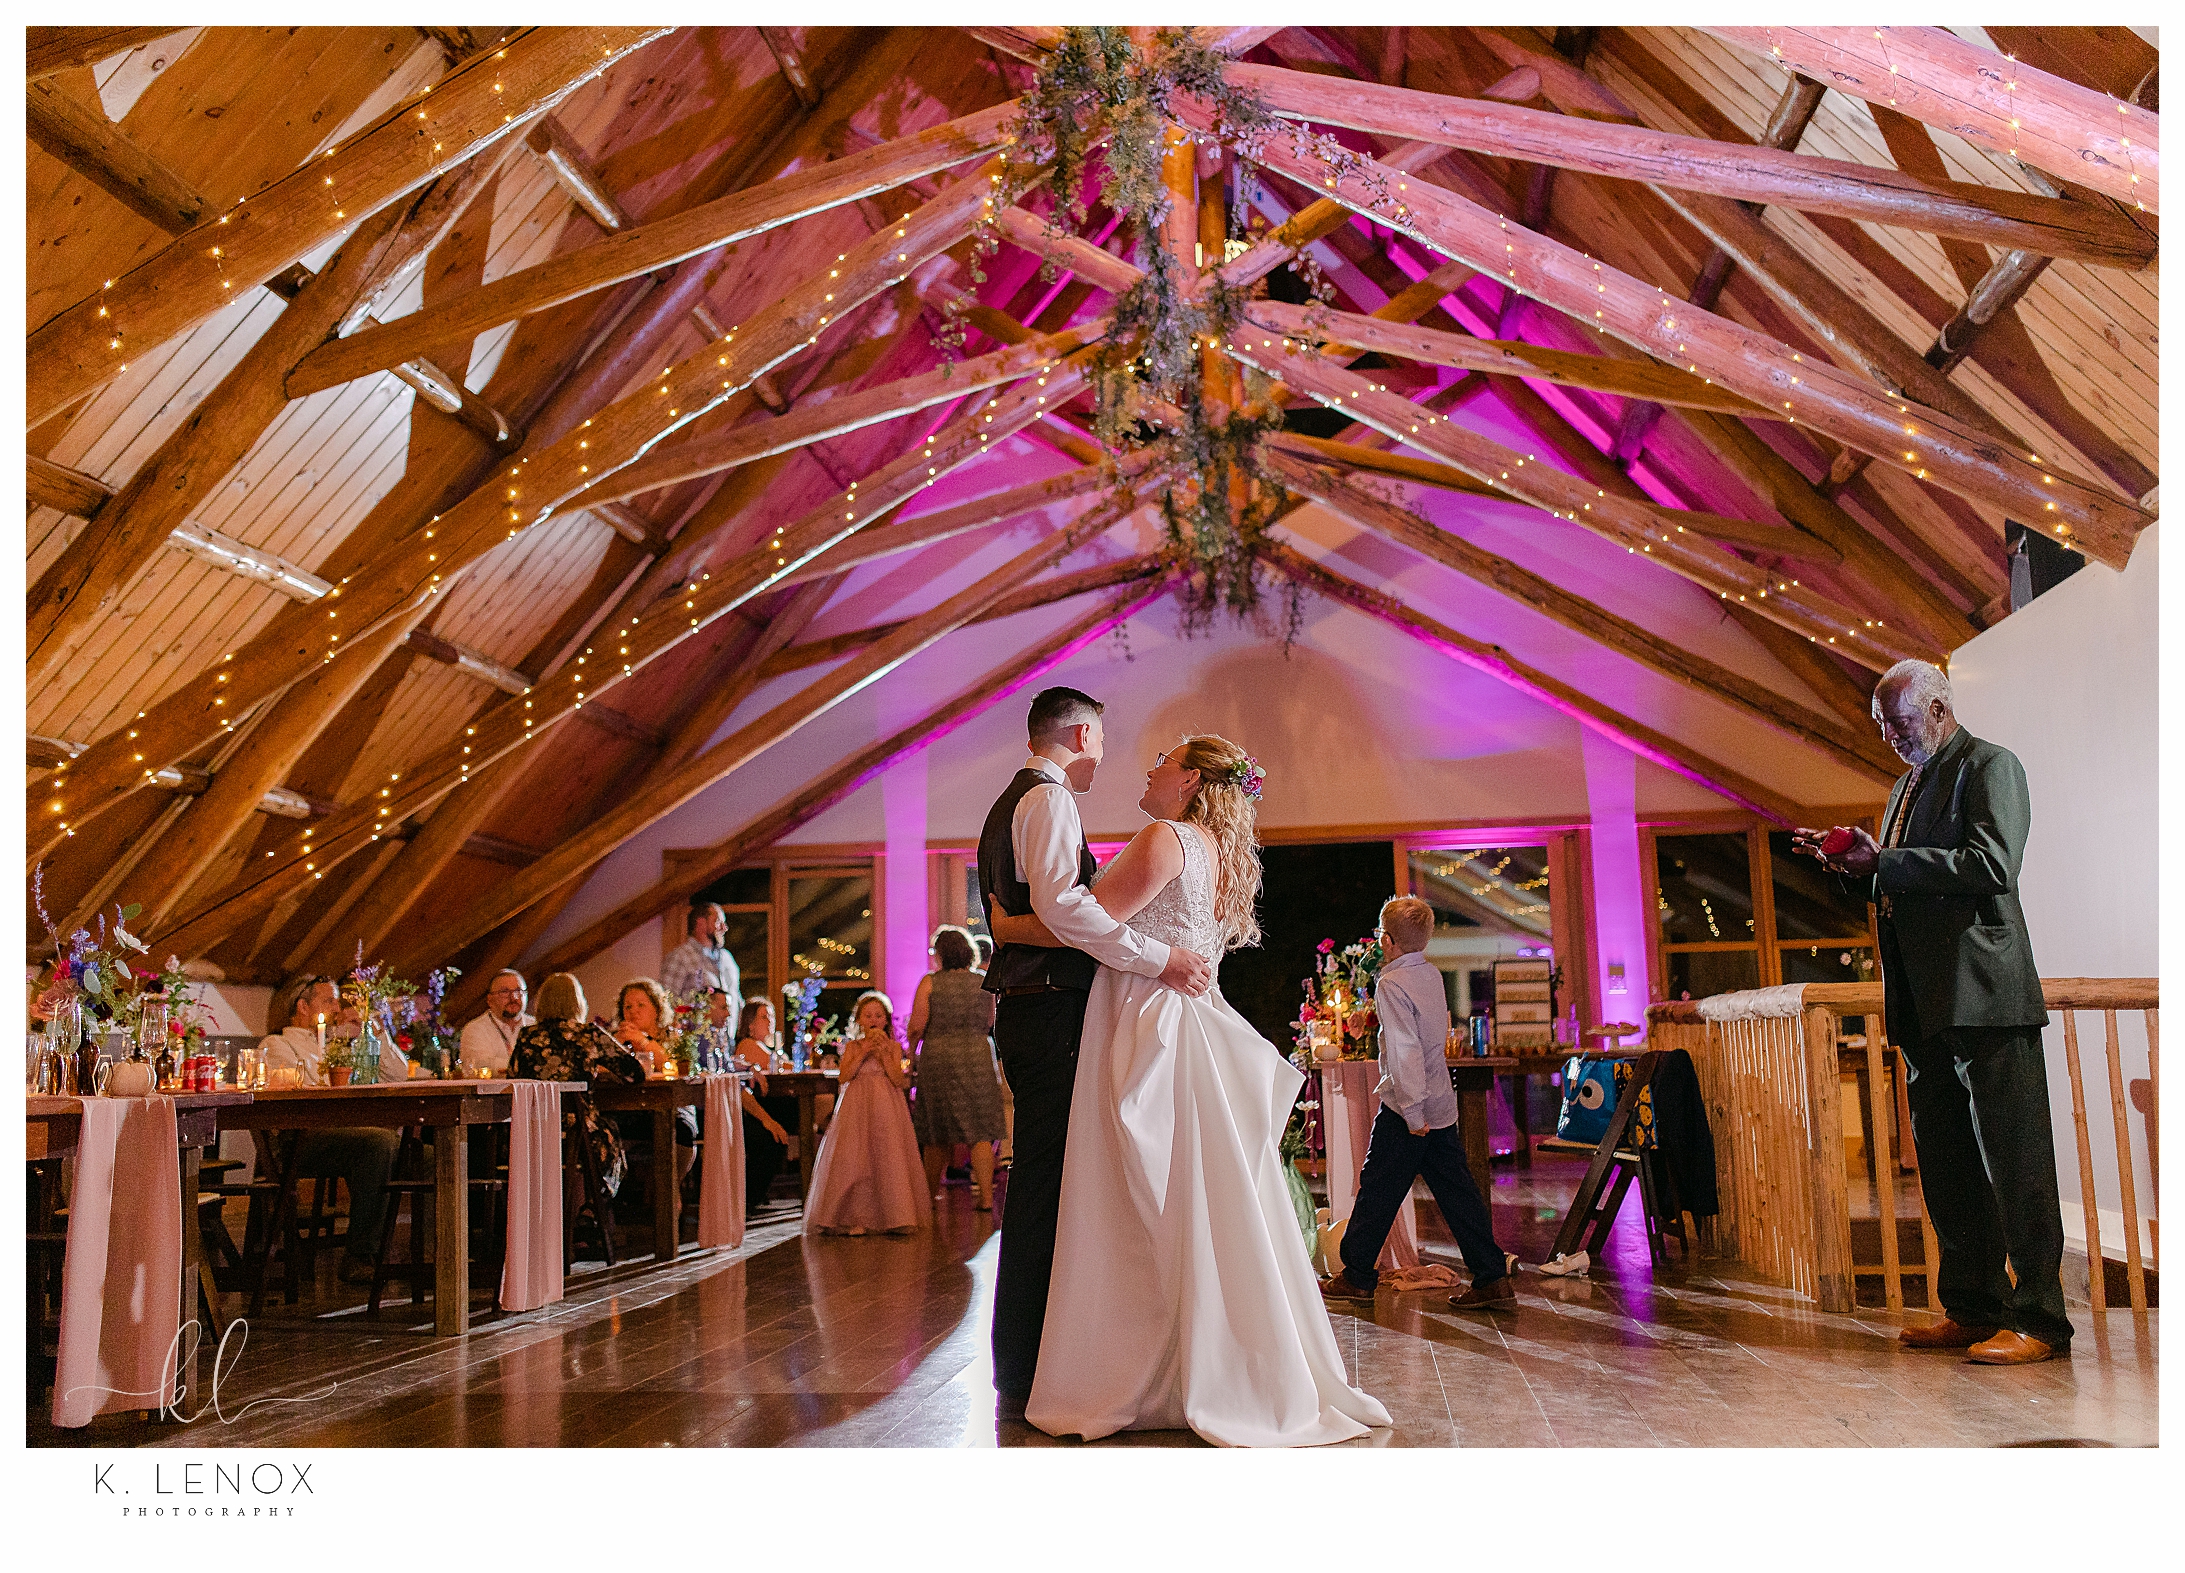 Wedding at Lake Falls Lodge- Inside Barn with uplighting. 